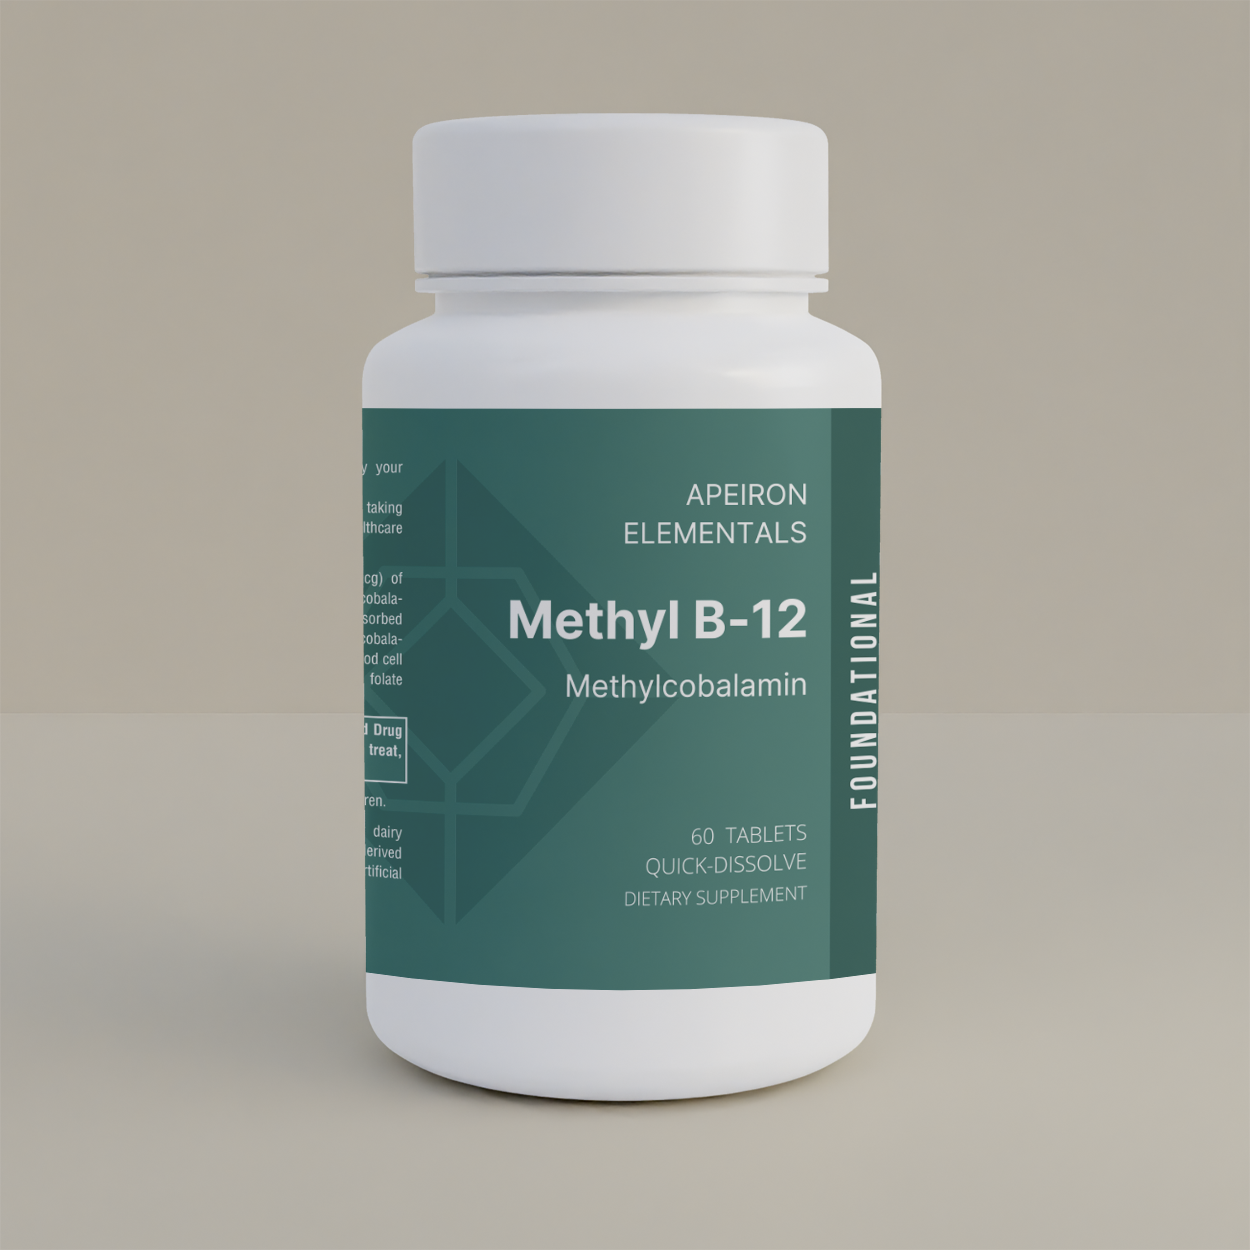 Staff: Methyl B-12